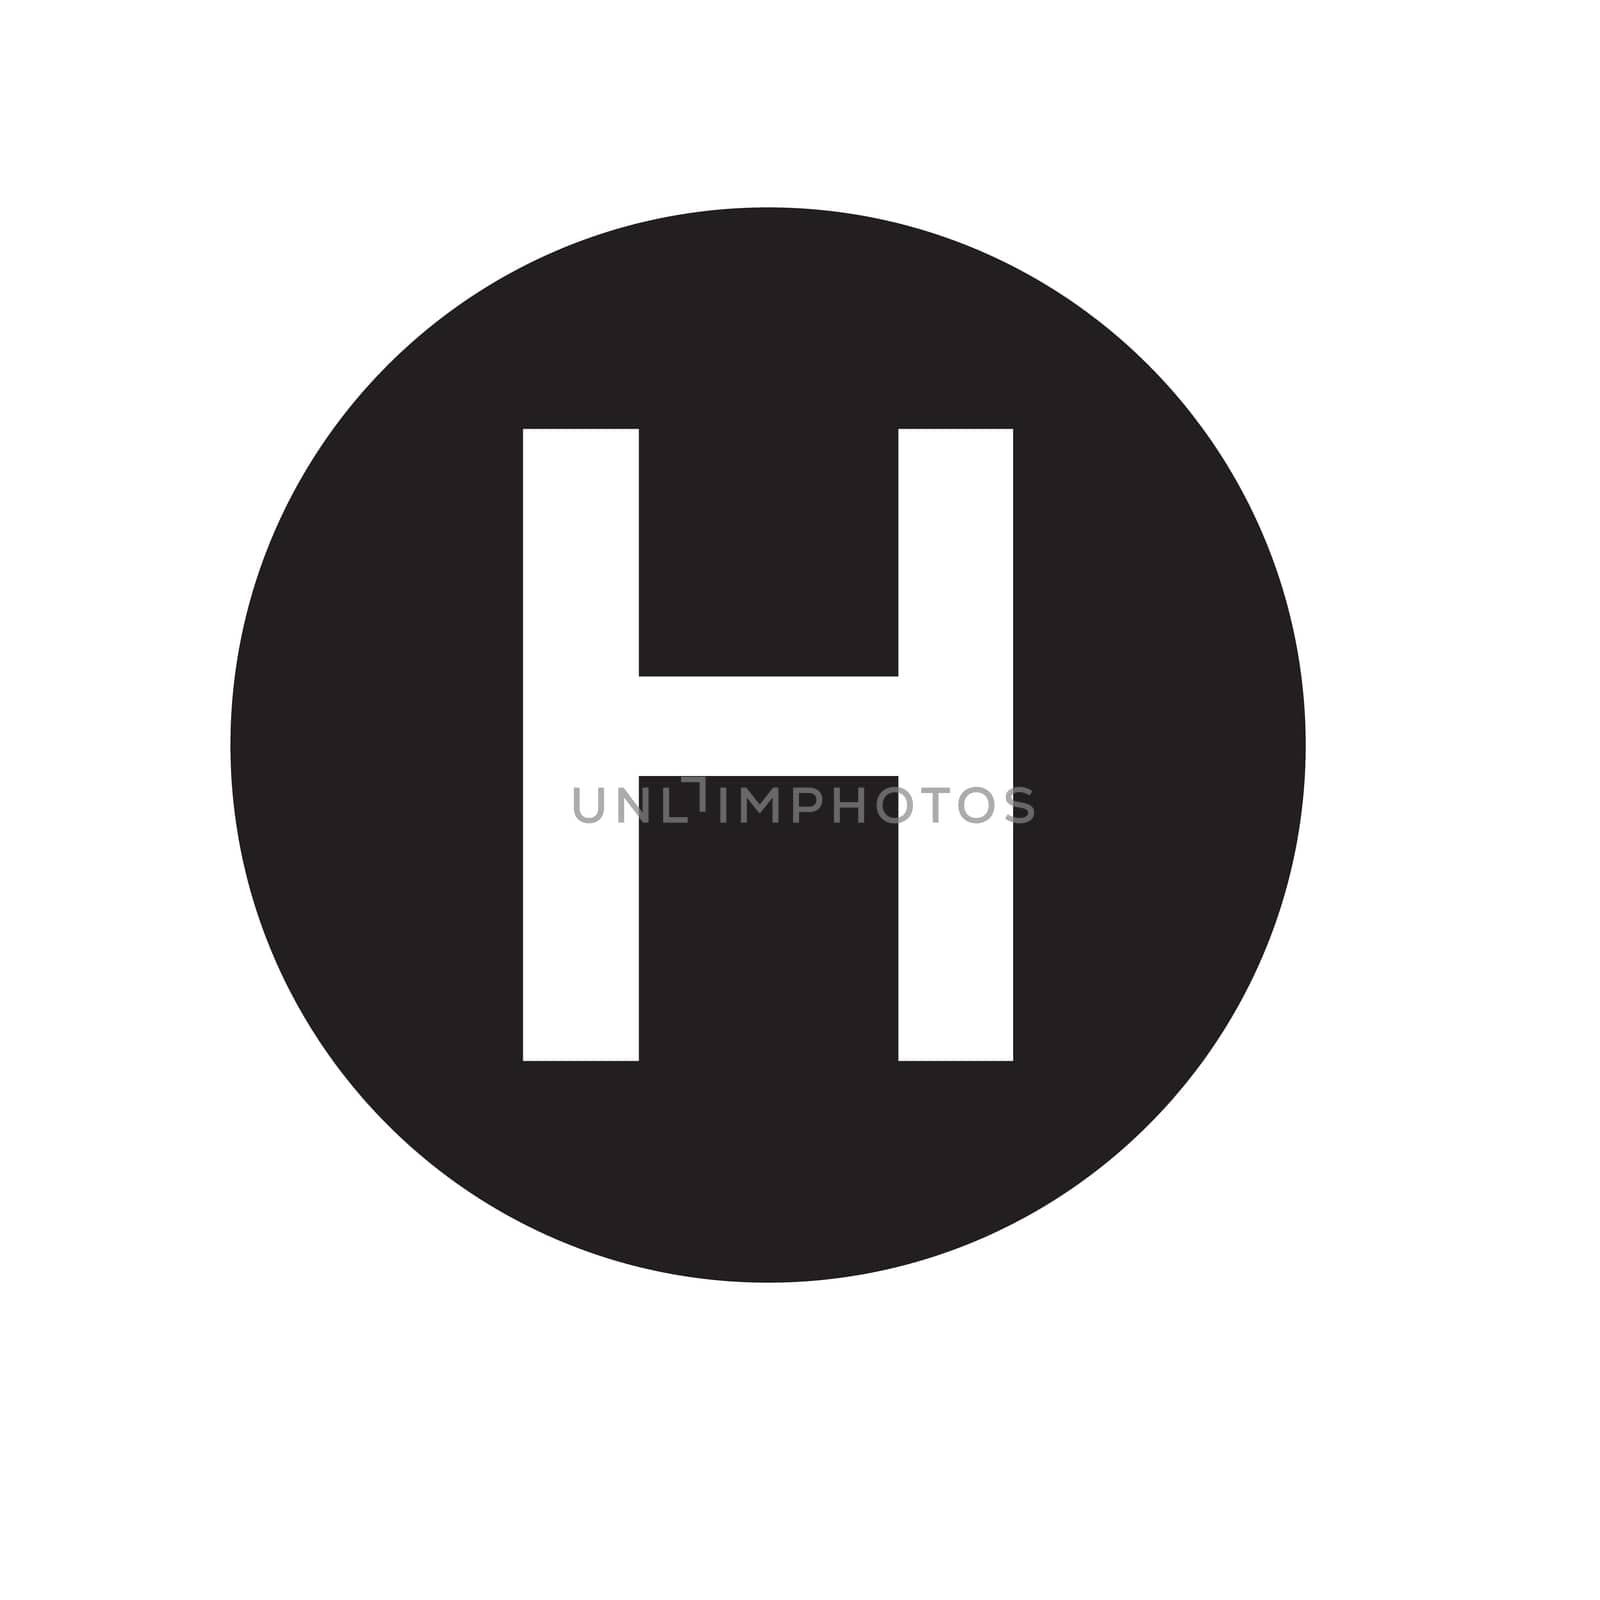 hospital icon on a white background. flat style. hospital icon for your web site design, logo, app, UI. hospital symbol.

